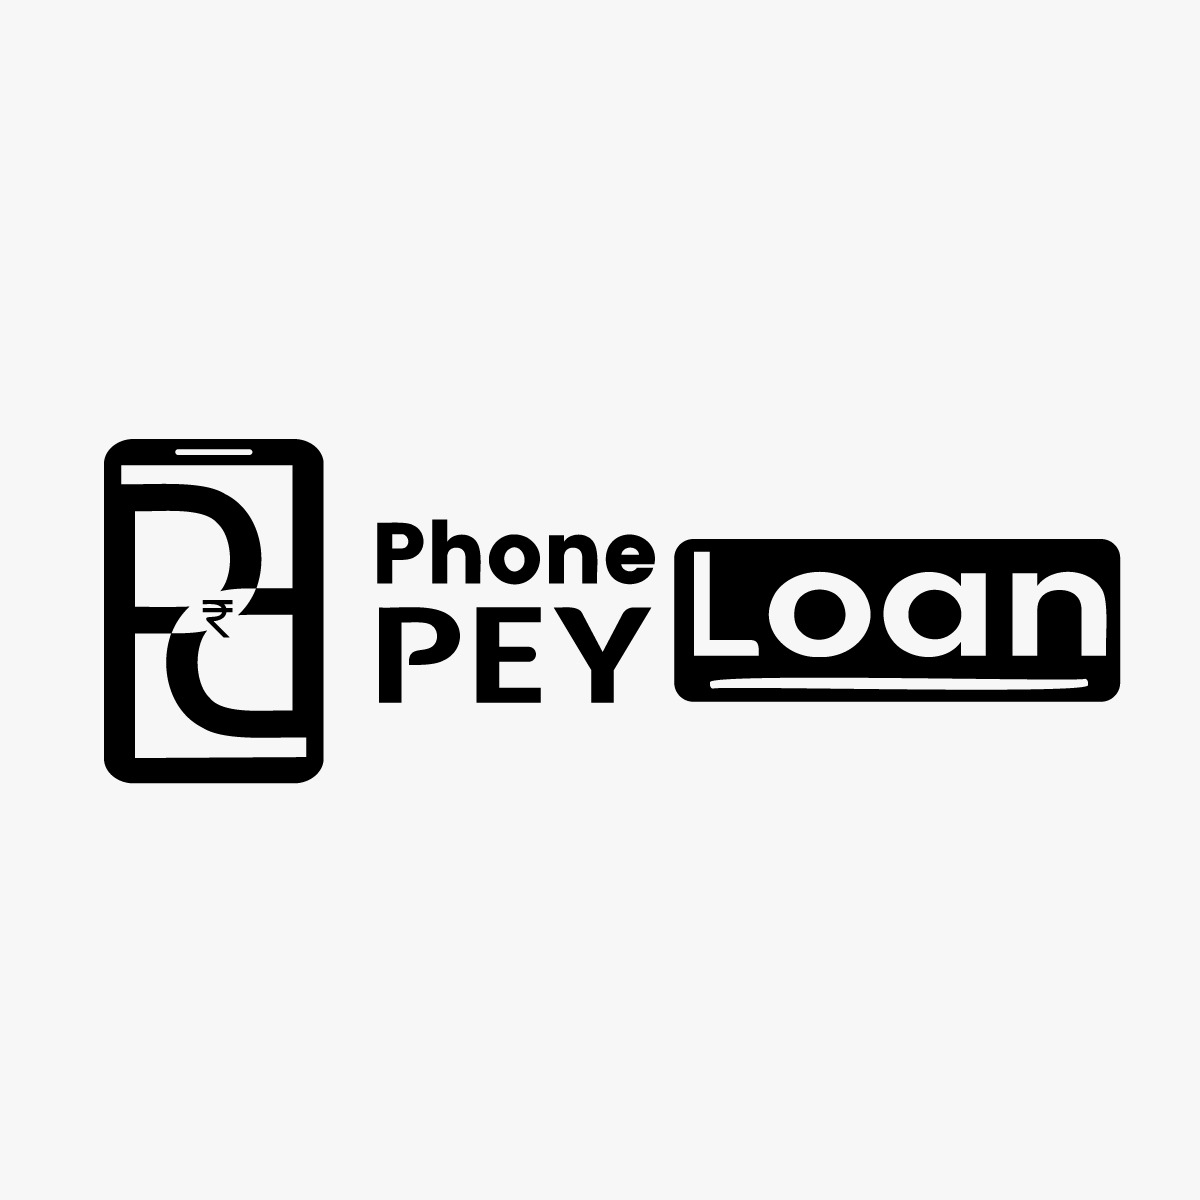  Personal Loan in Coimbatore | Phonepeyloan